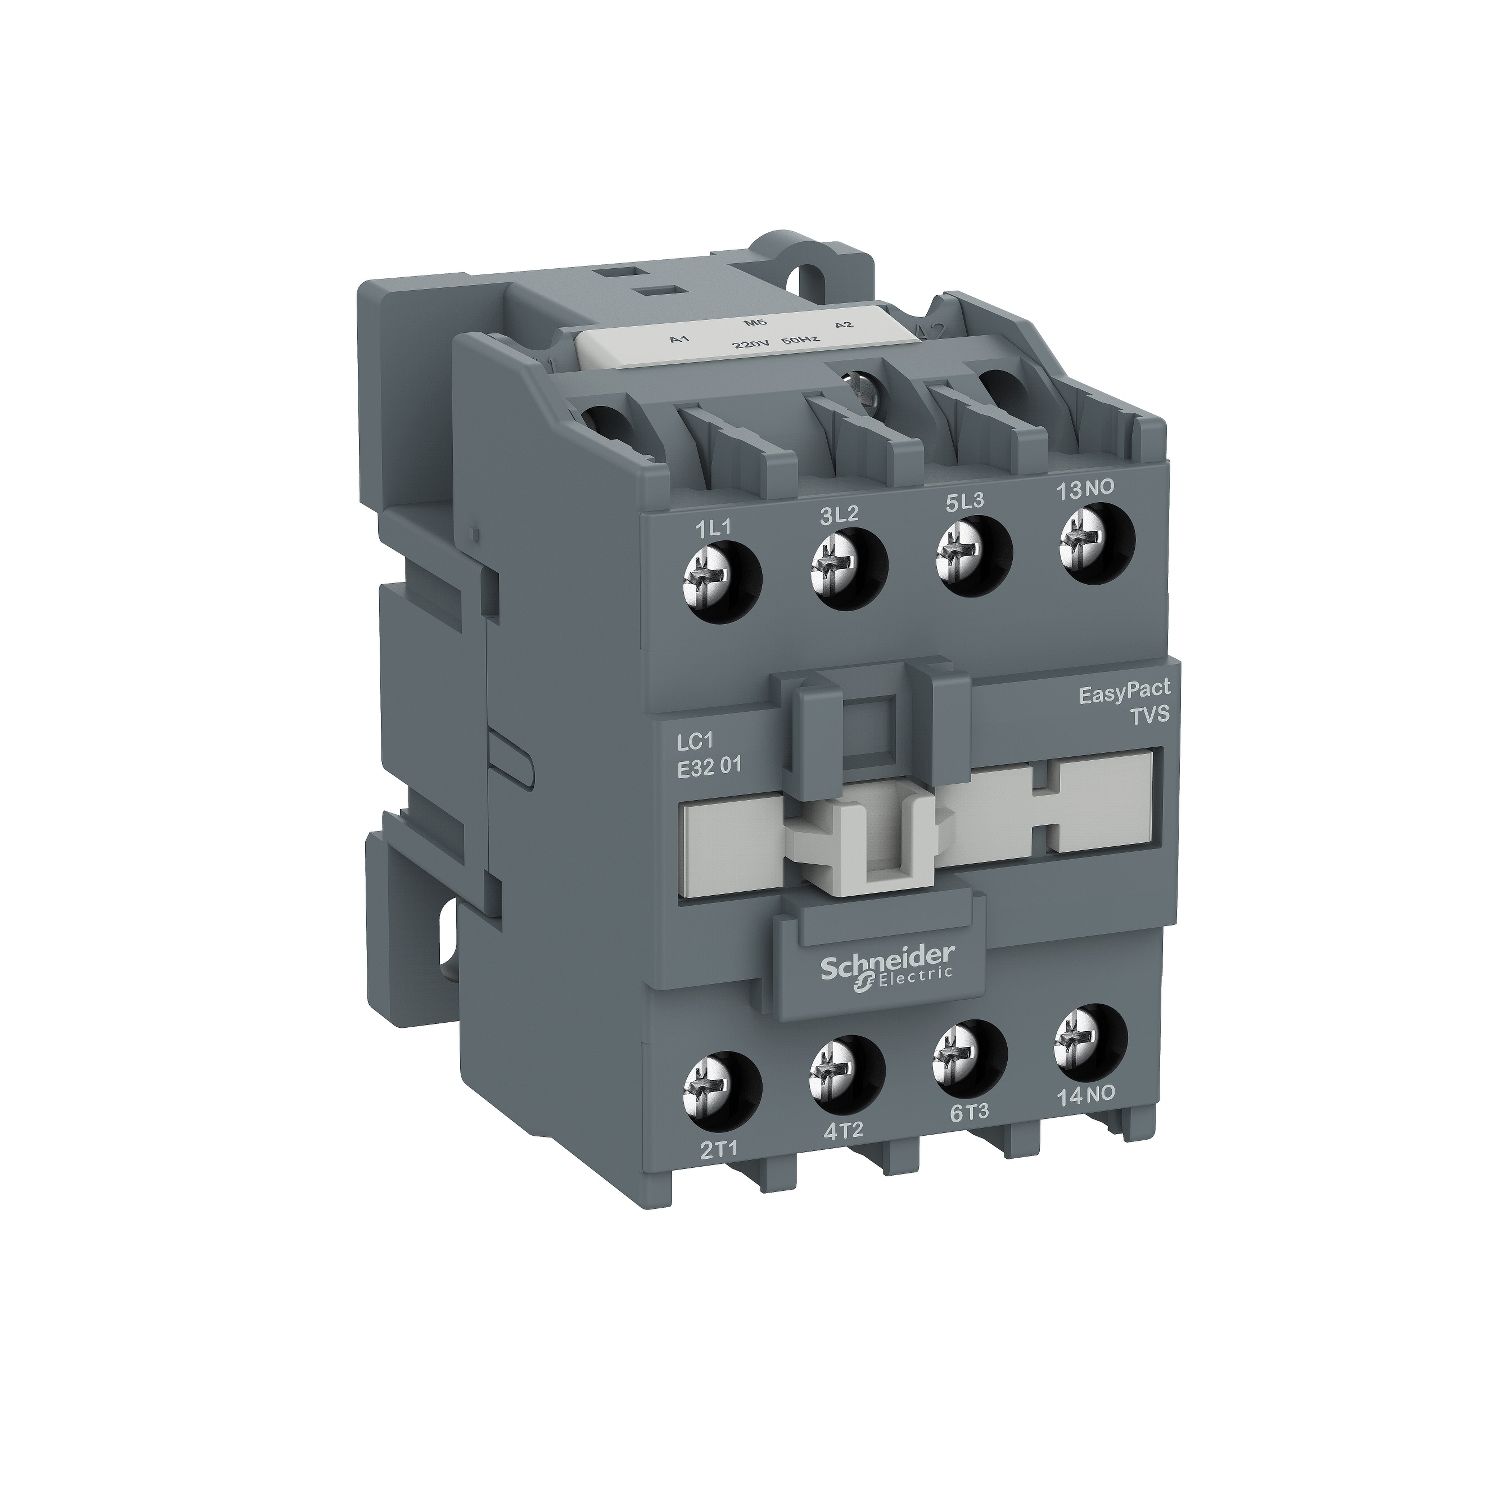 LC1E3801M5 Contactor,Easy TeSys Control,LC1E,3P(3NO),AC-3,<=440V,38A,220V AC coil,50Hz,1NC auxiliary contact